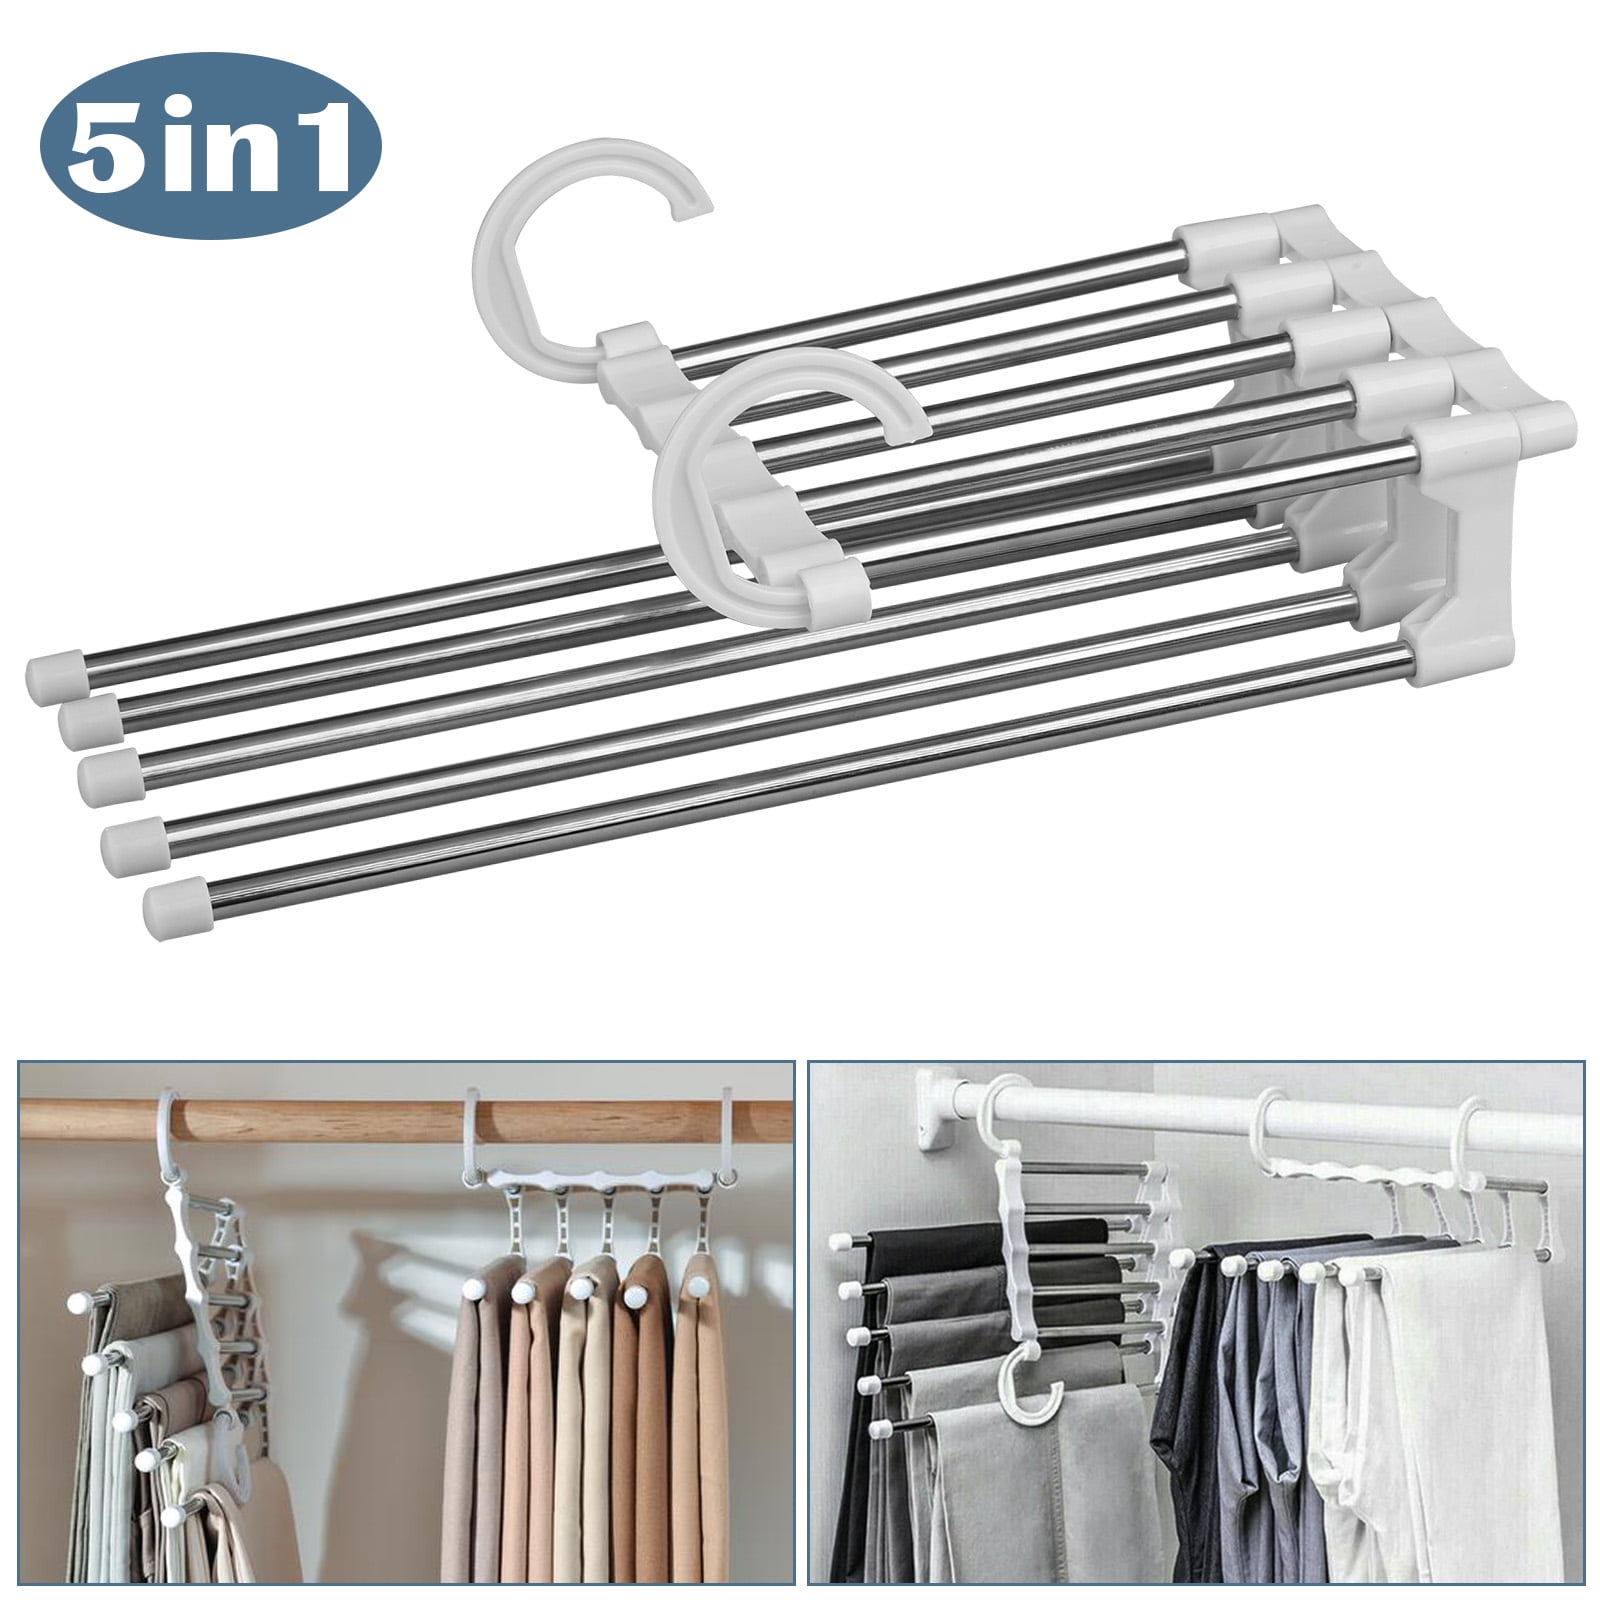 2 Multi Purpose Hanger Pants Rack Hanger 5 Layer SType Scarf Tie Organizer Metal 